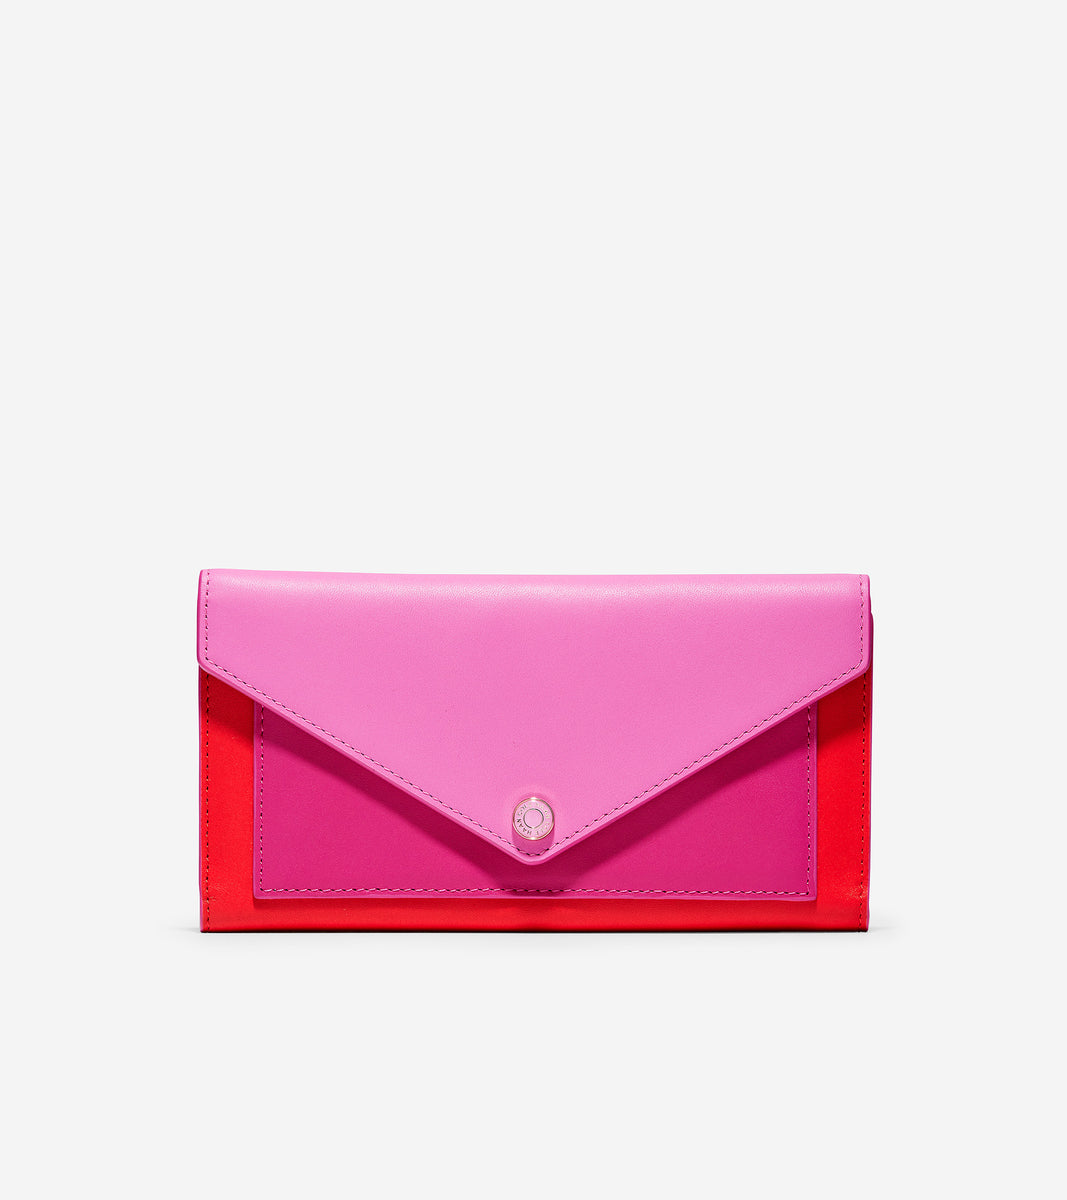 ColeHaan-GRANDSERIES Flap Wallet-u04493-Fuchsia-Red Leather